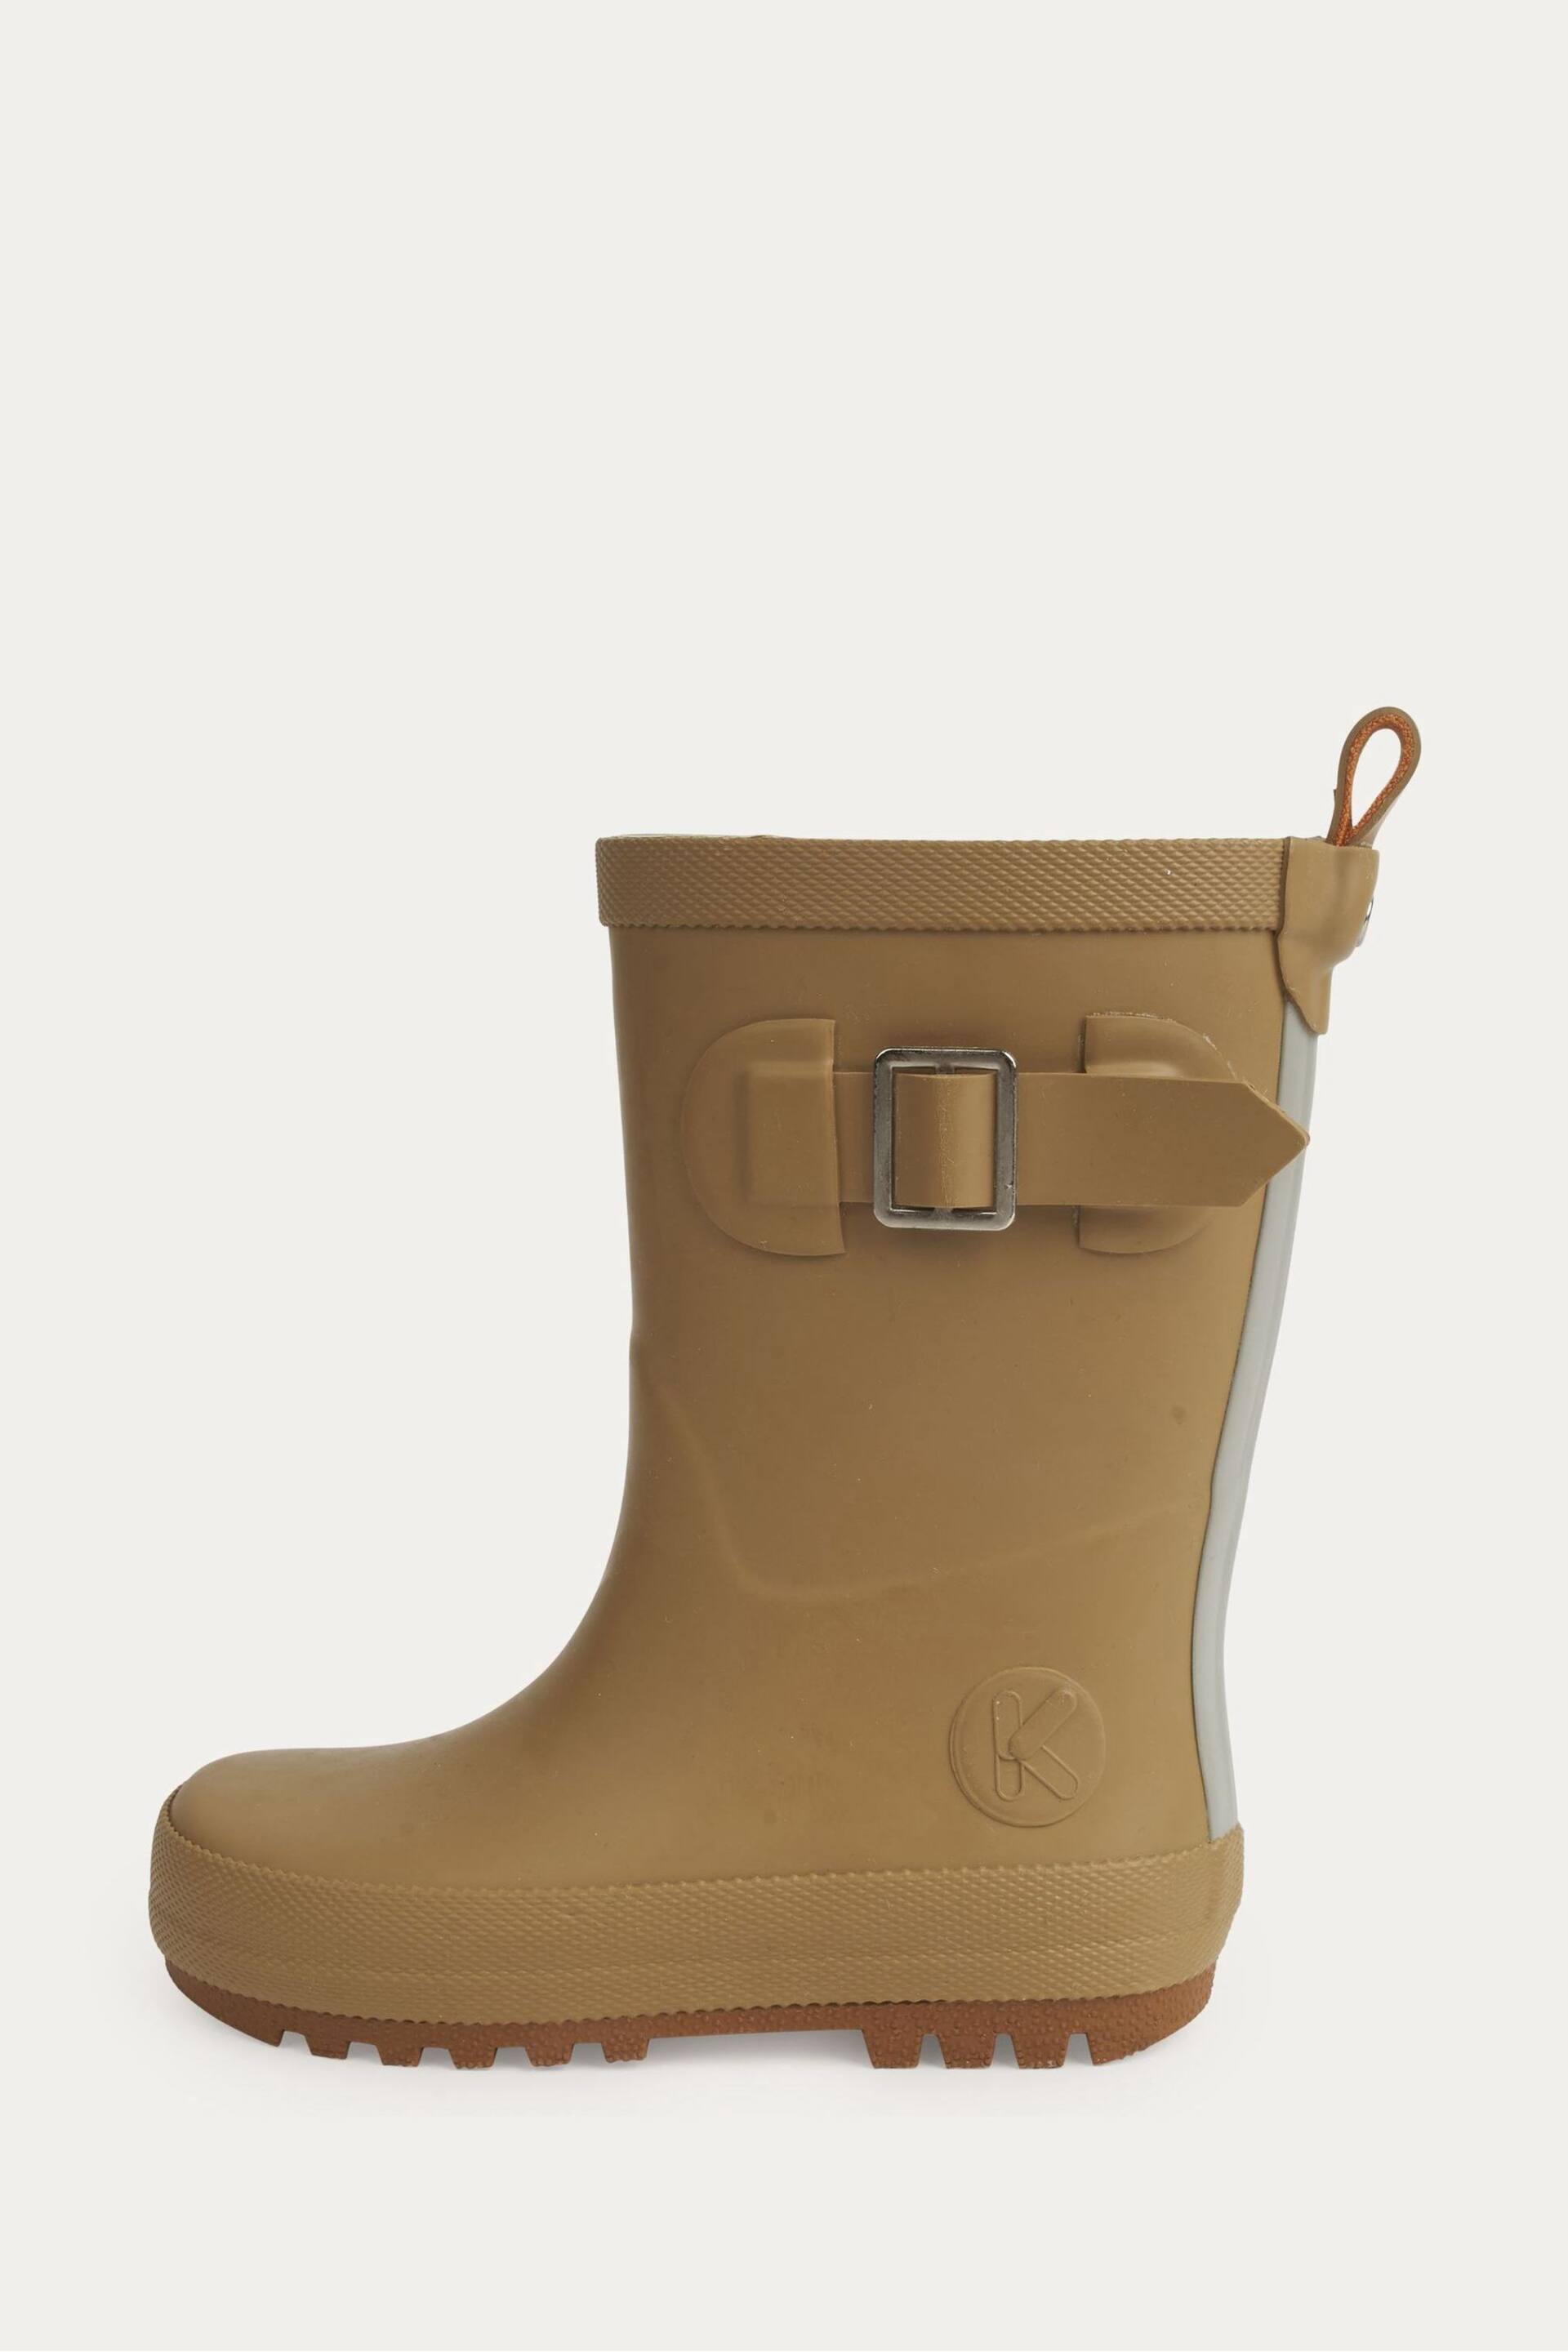 KIDLY Rain Boots with Binding - Image 2 of 7